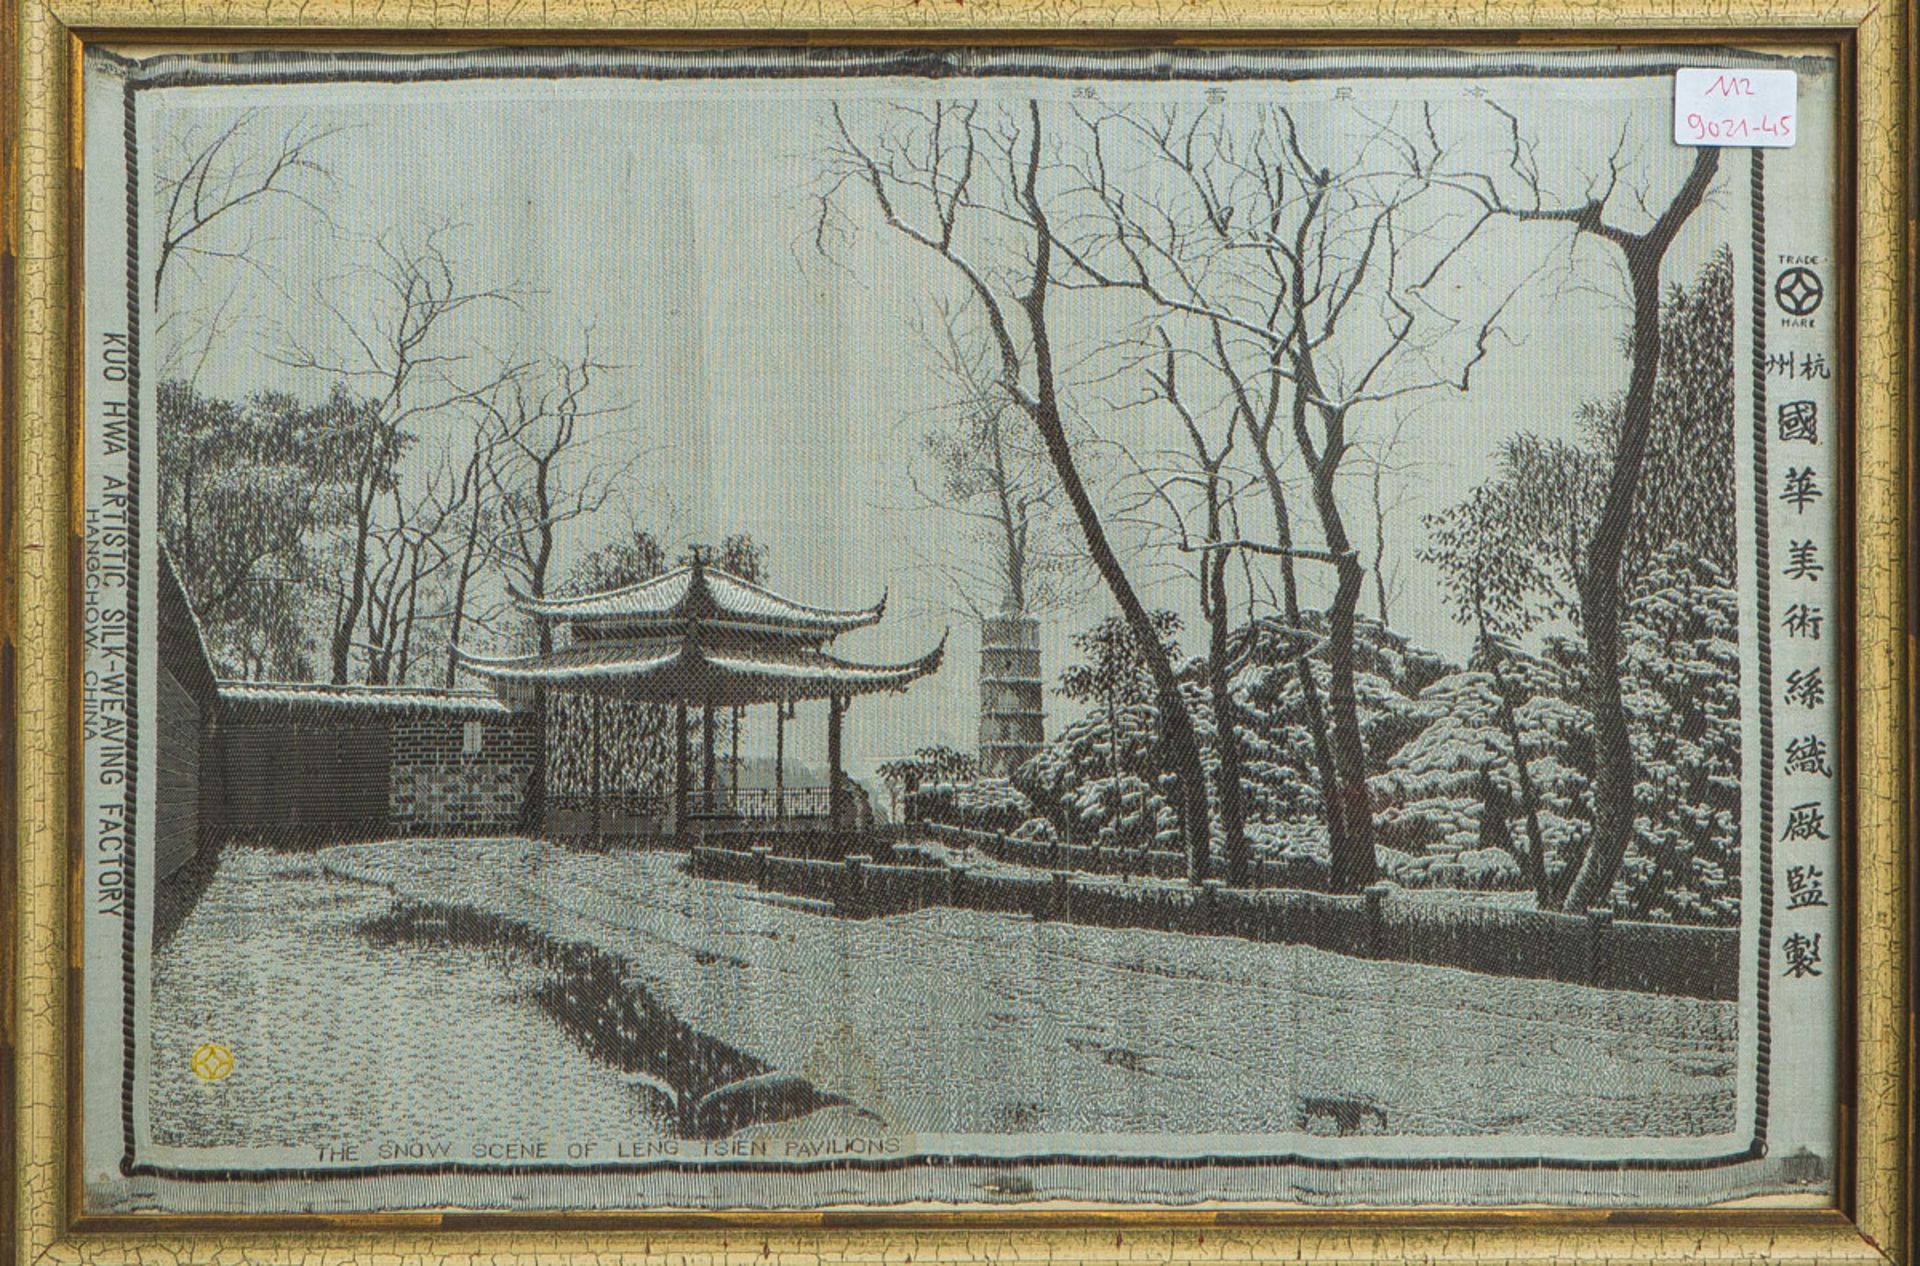 Seidenstickerei "The Snow Scene of Leng Tsien Pavilions" (China, Kvo HWA Artistic Silk-Waeving Facto